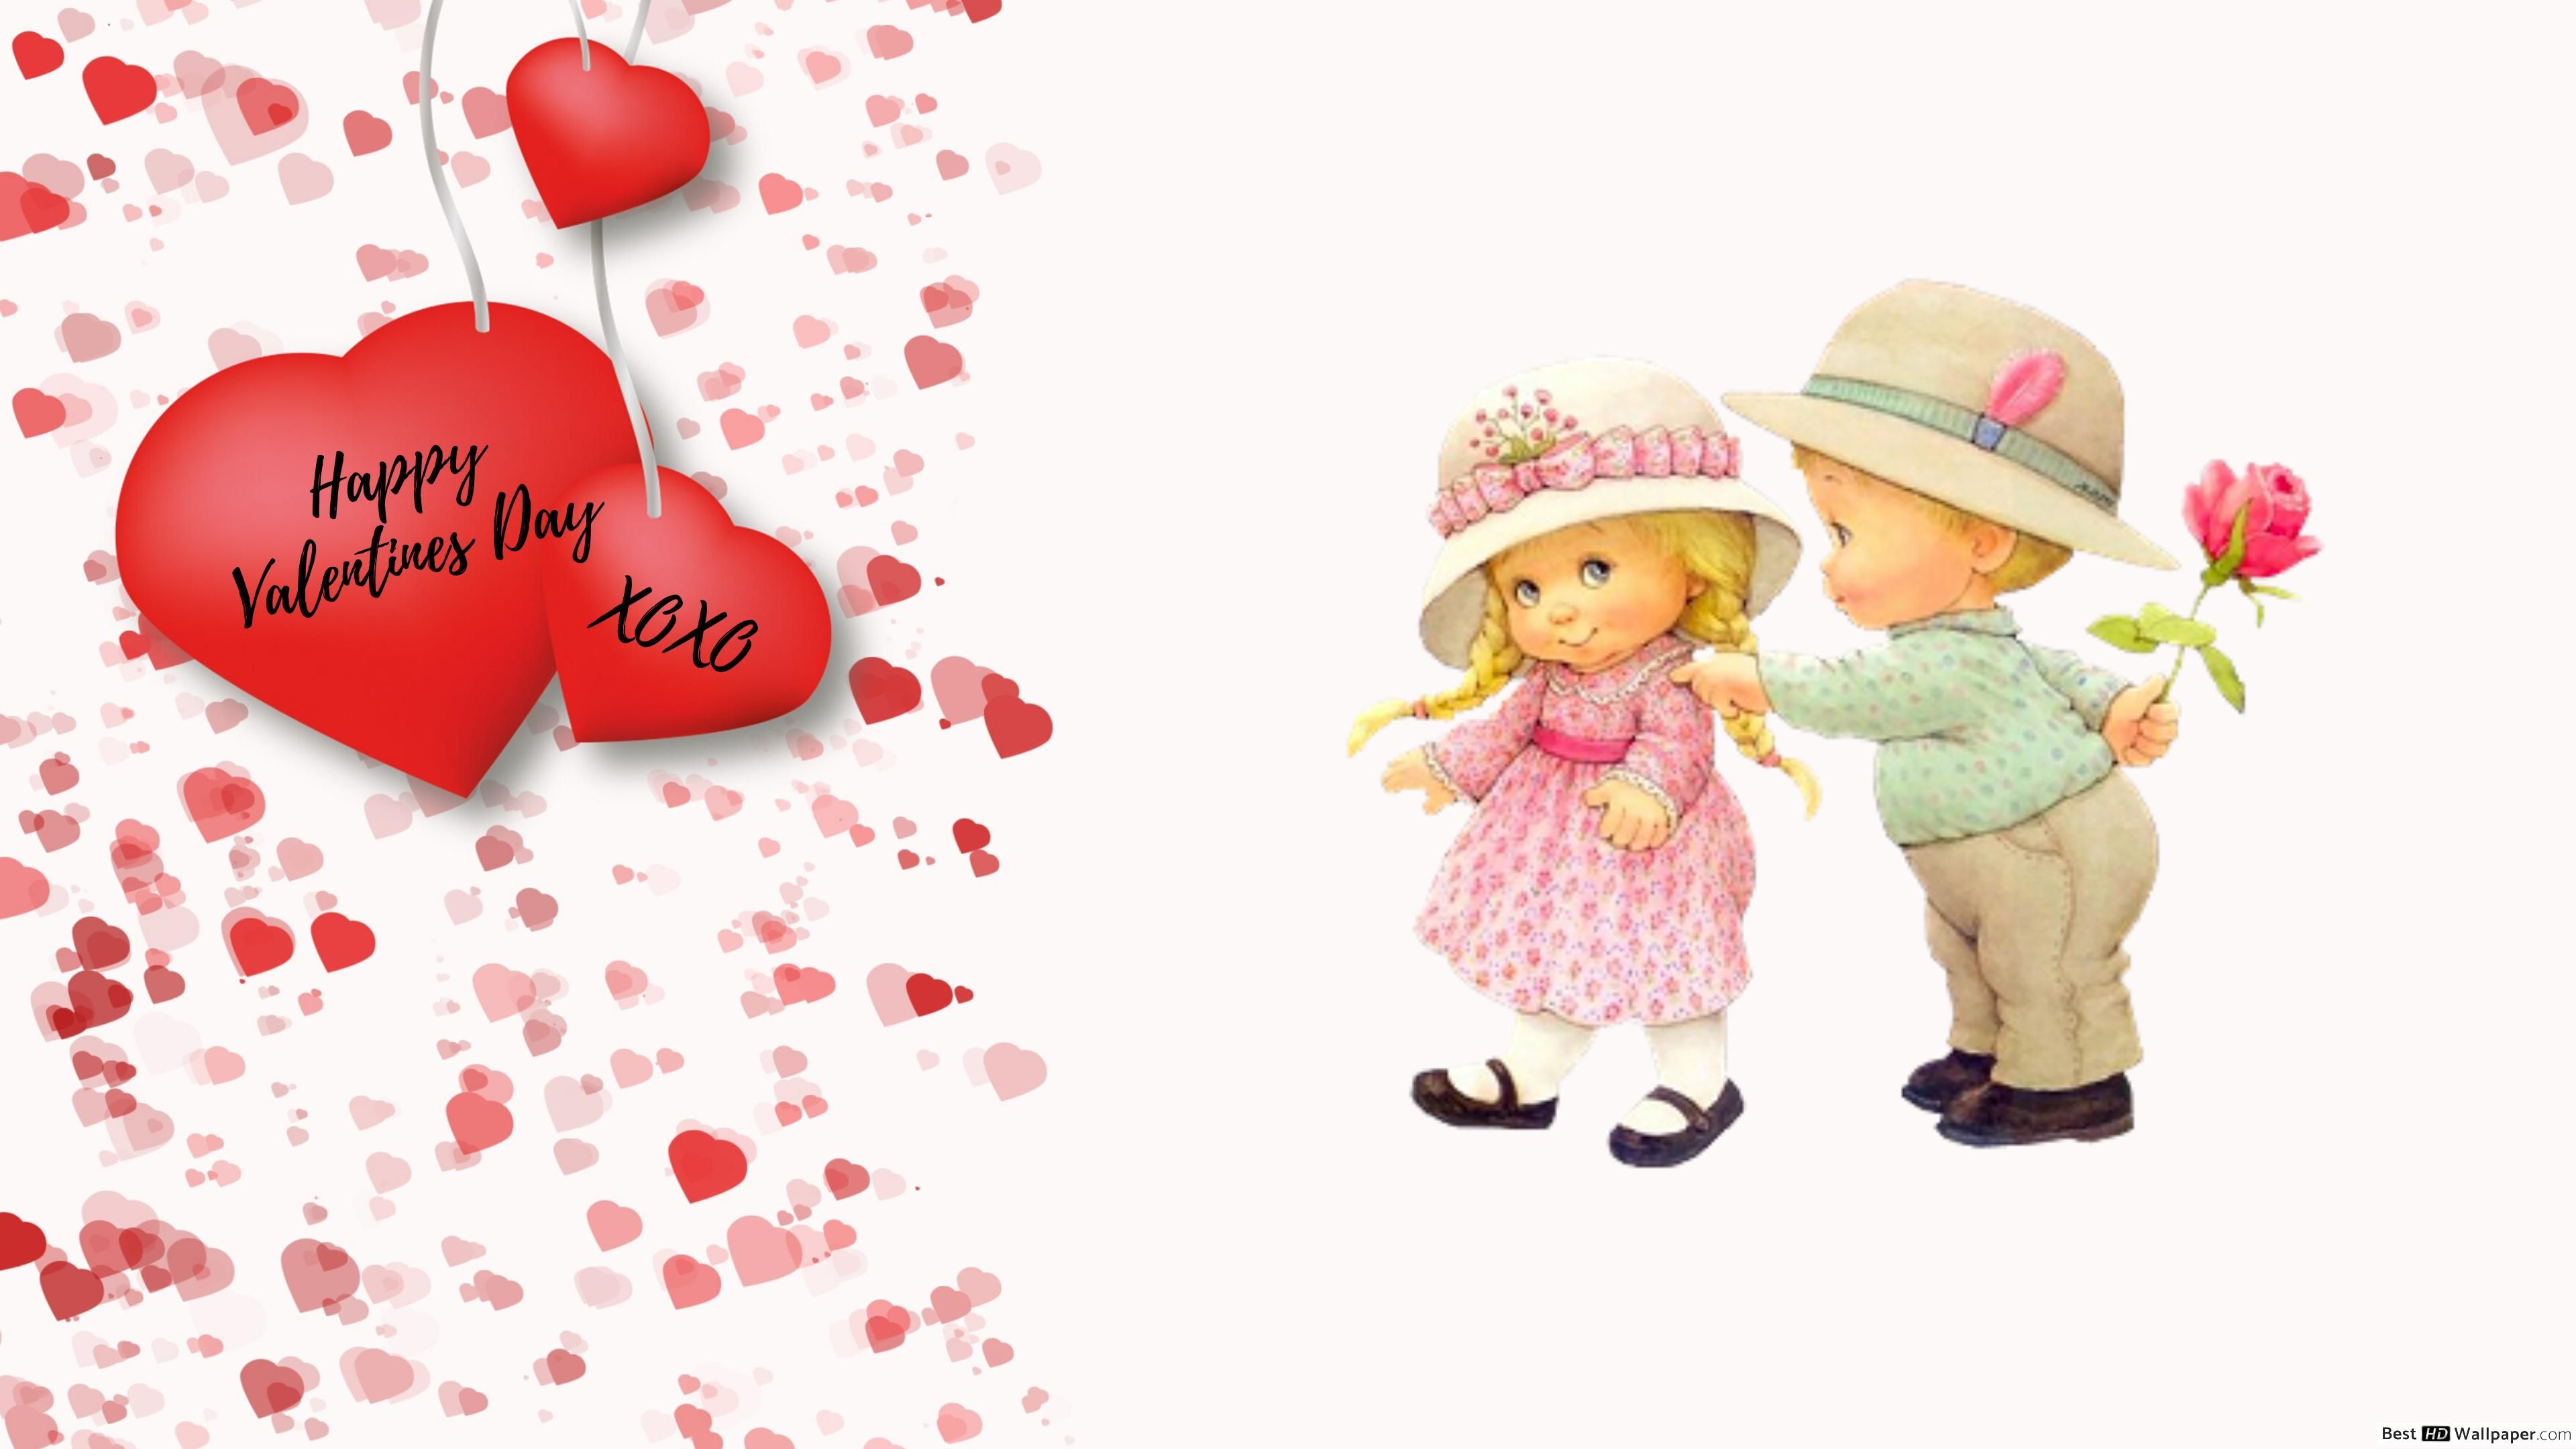 Valentines Day love HD wallpaper download